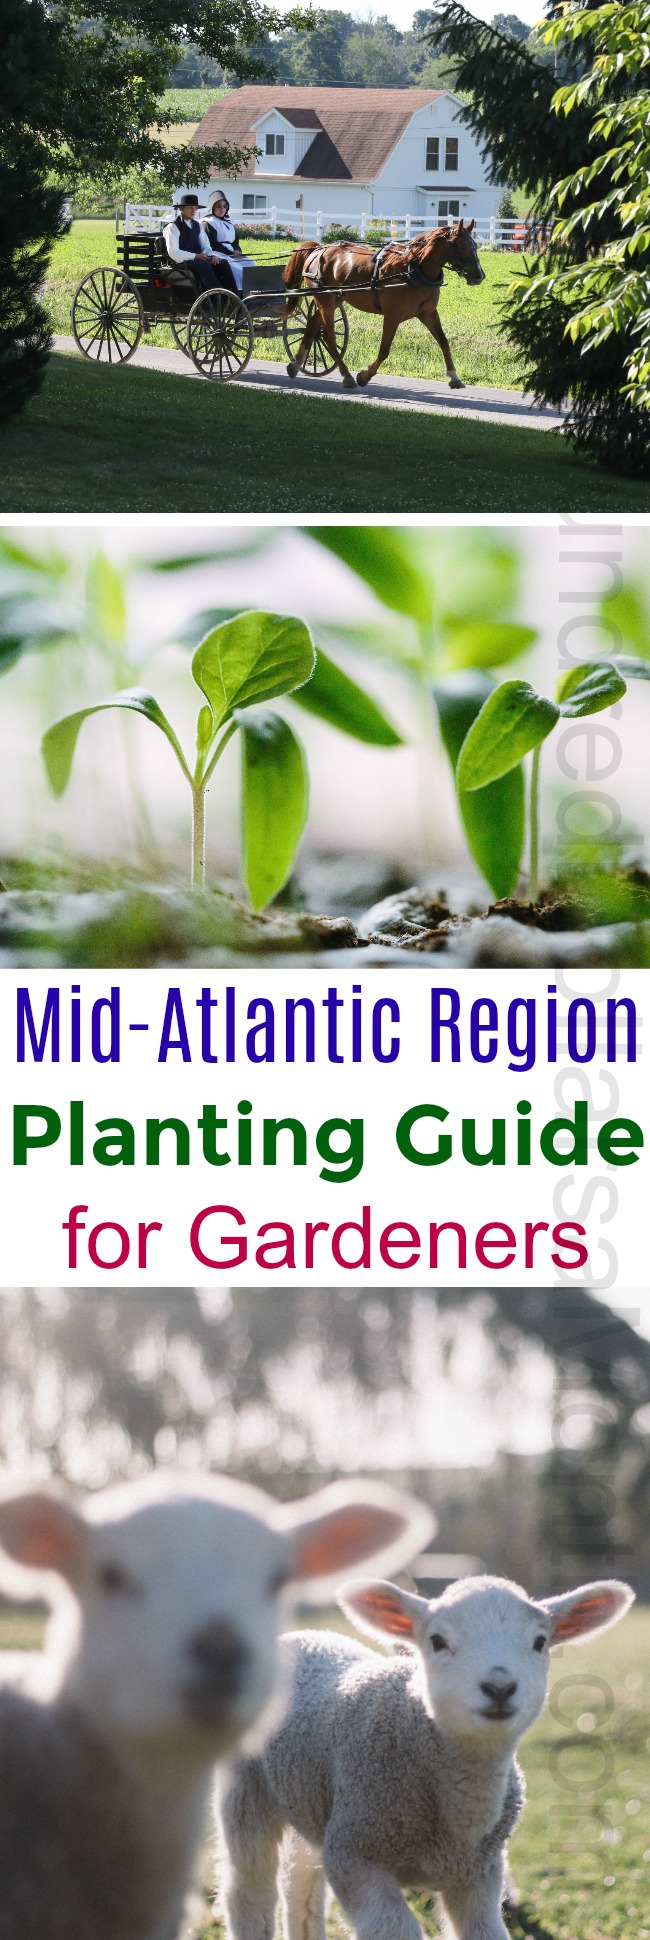 Mid-Atlantic Region Planting Guide